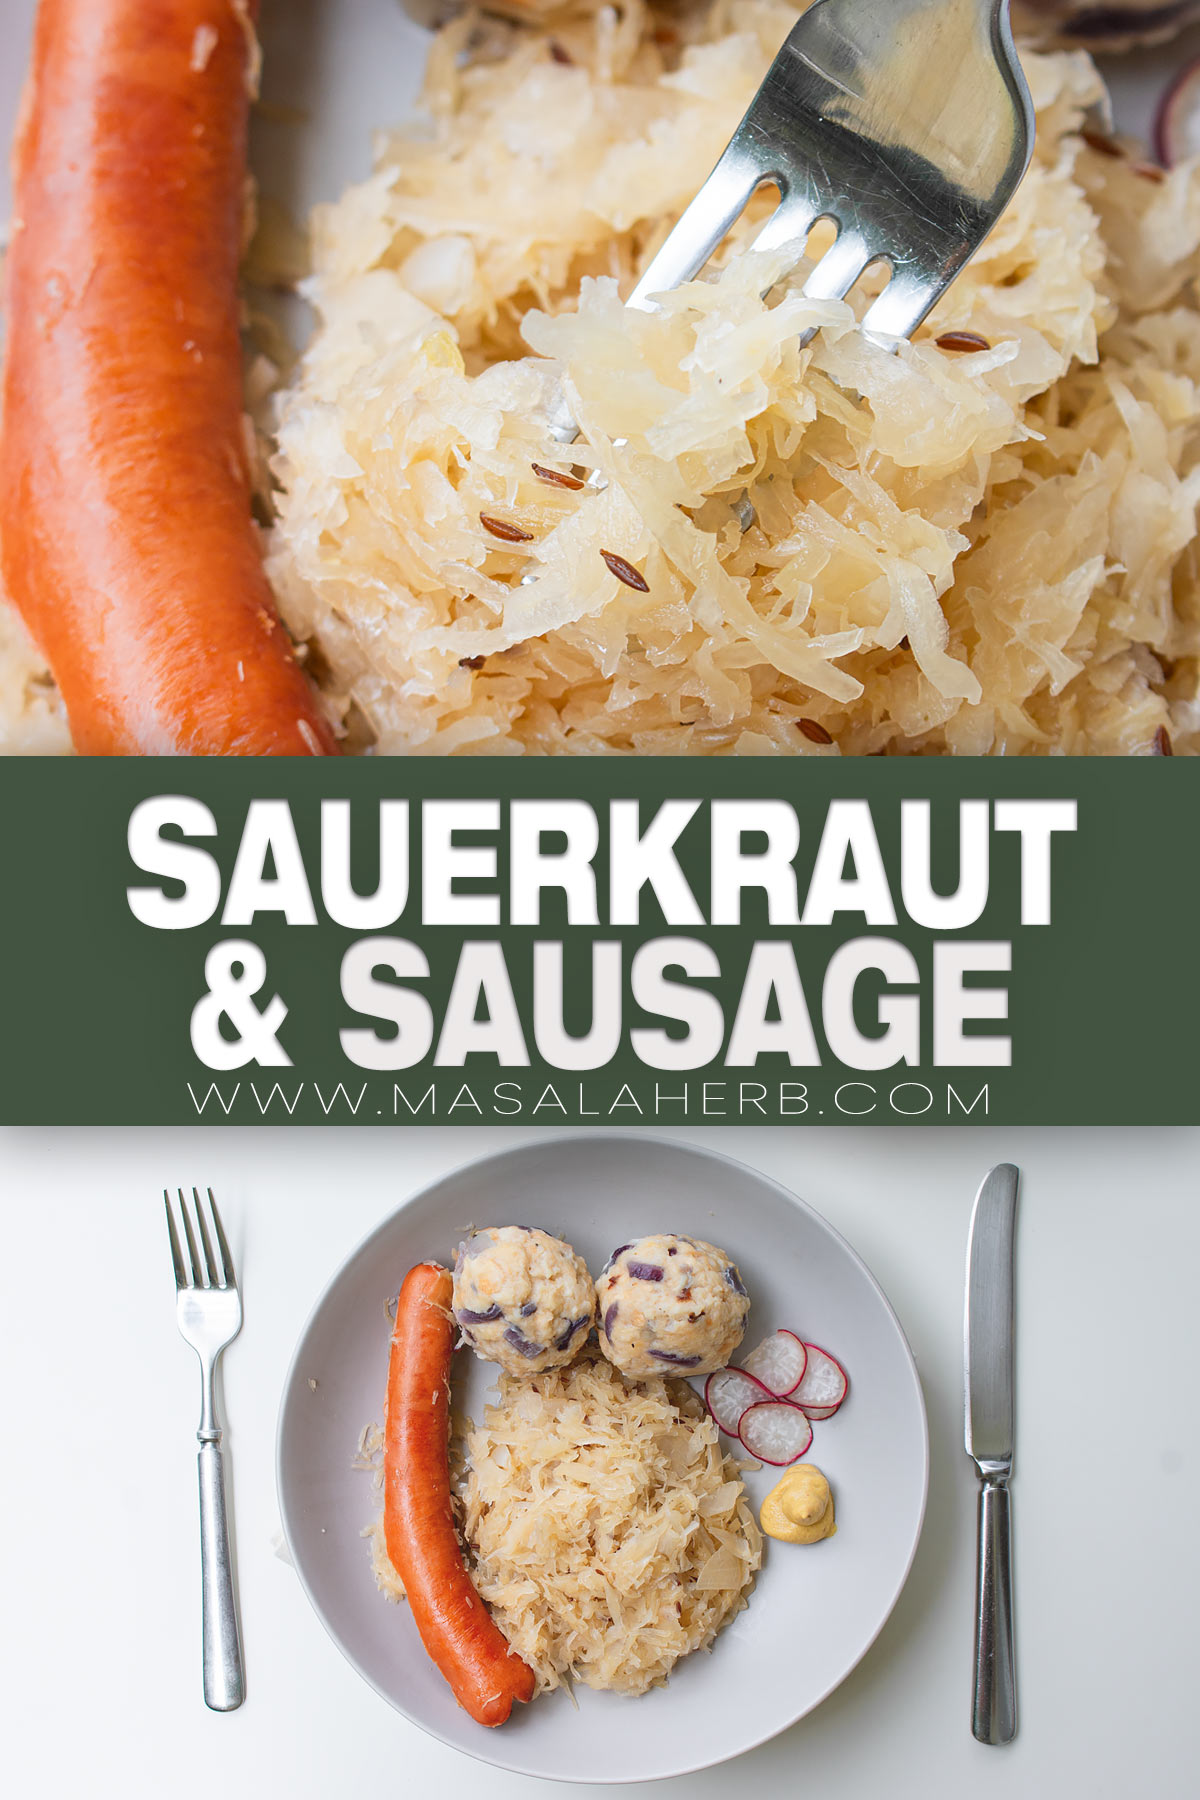 Bavarian Sauerkraut and Sausage Recipe pim image